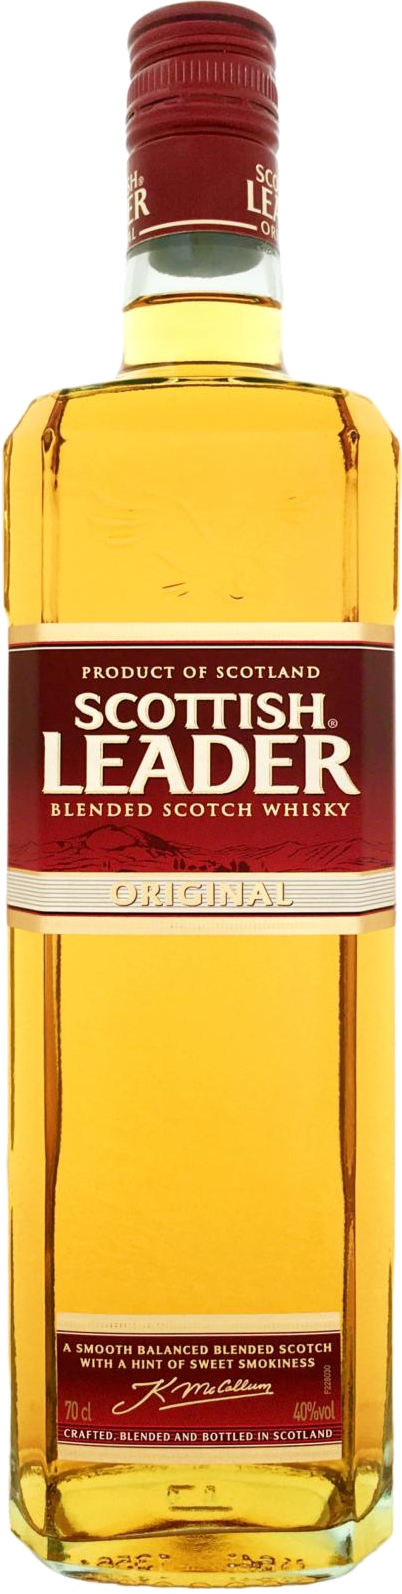 Scottish Leader Blended Scotch Whisky - Bottles and